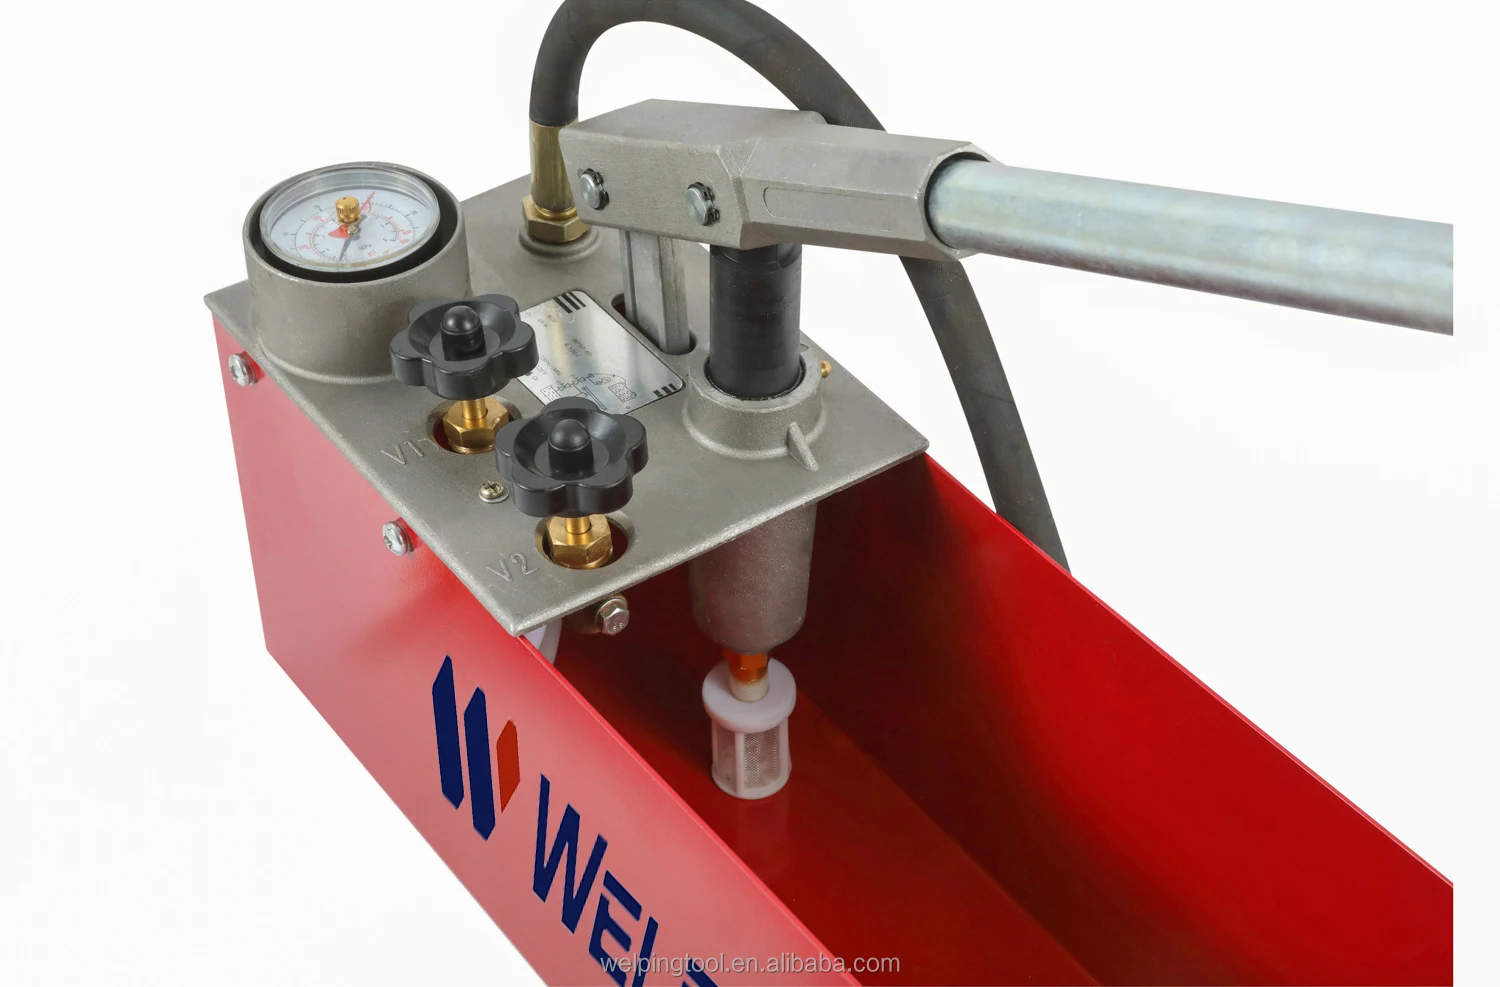 Welping RP50 Plumbing Tools Hydraulic Water Pressure Test Pump Manual For Sale